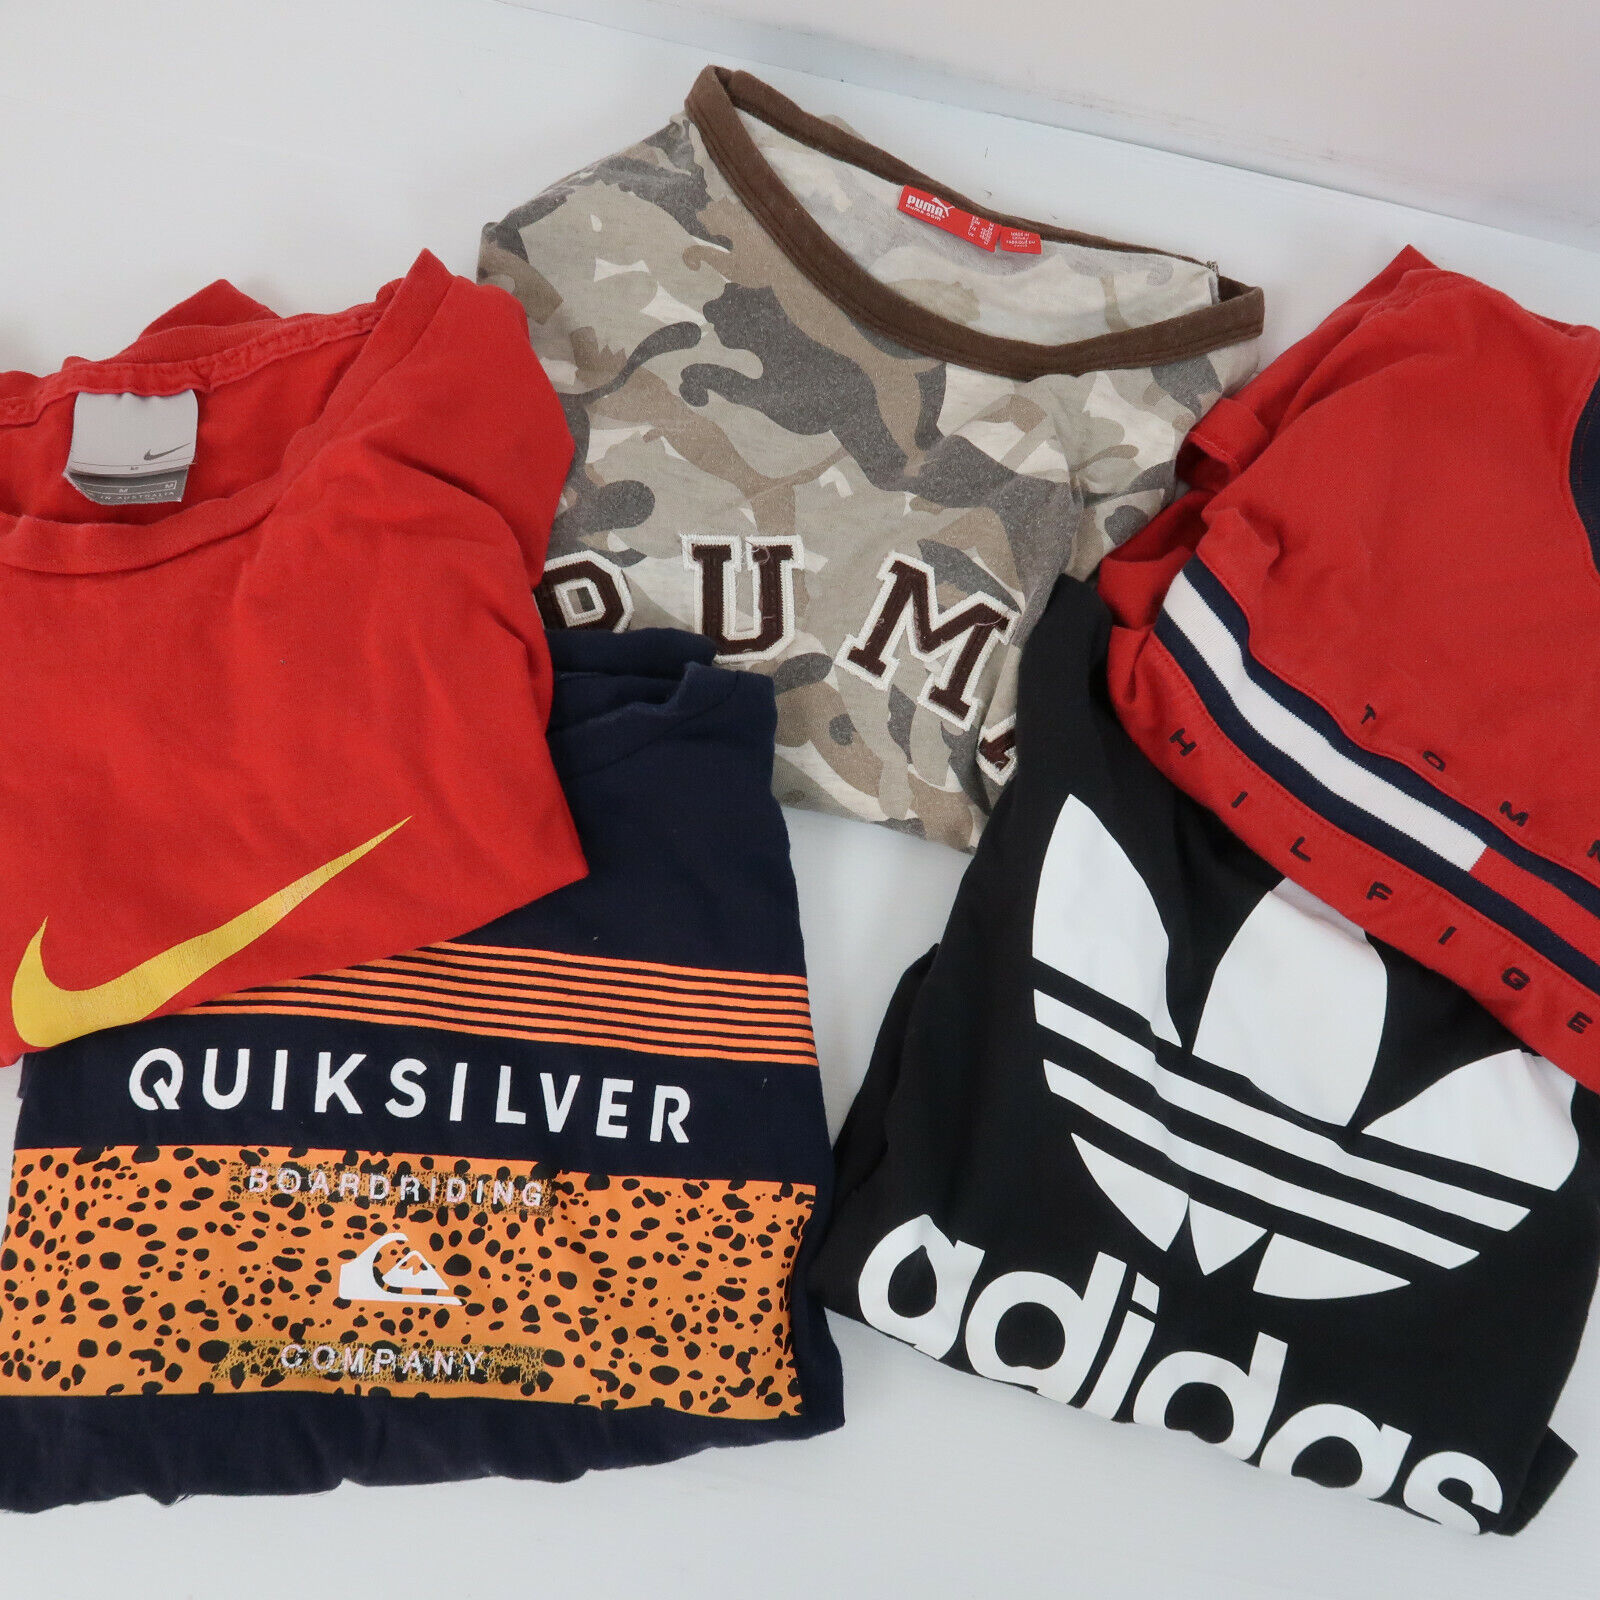 10x Mens T-Shirt Branded Nike Adidas Clothing Reseller Wholesale Bulk Lot Bundle Assorted Does Not Apply - фотография #2